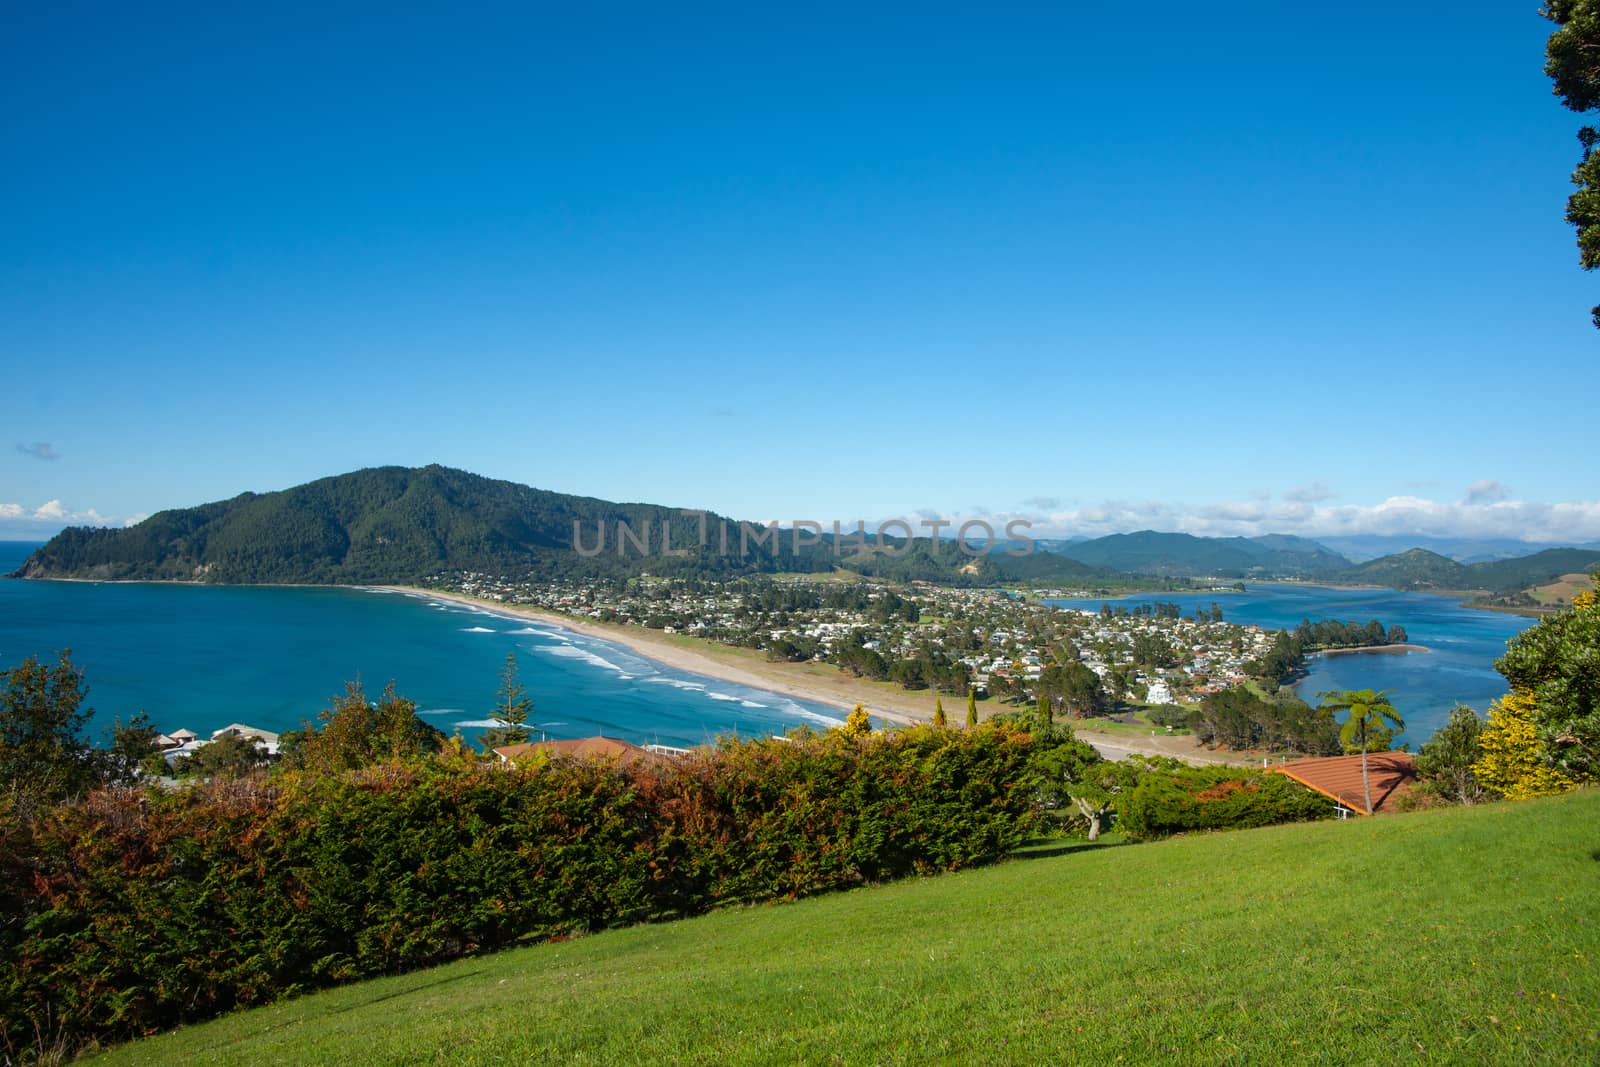 Tairua township and beach on Coromandel Peninsula, New Zealand by brians101